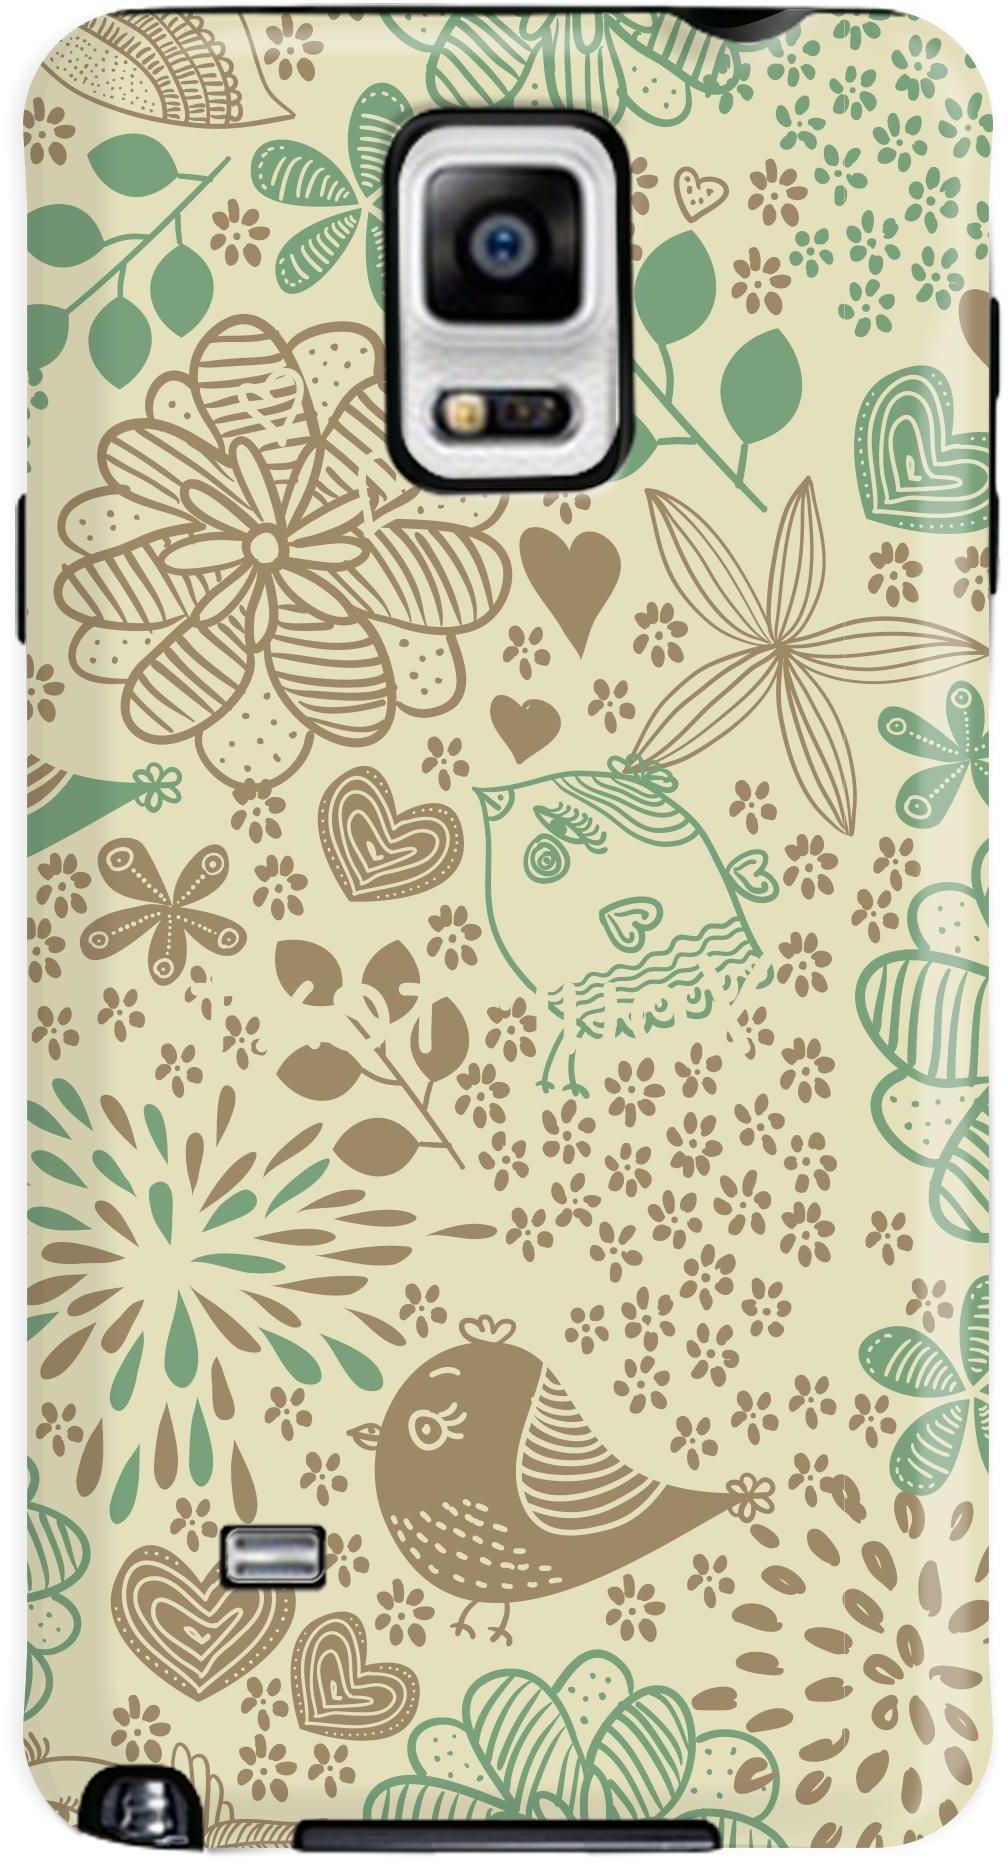 Stylizedd Samsung Galaxy Note 4 Premium Dual Layer Tough Case Cover Matte Finish - Cozy Garden